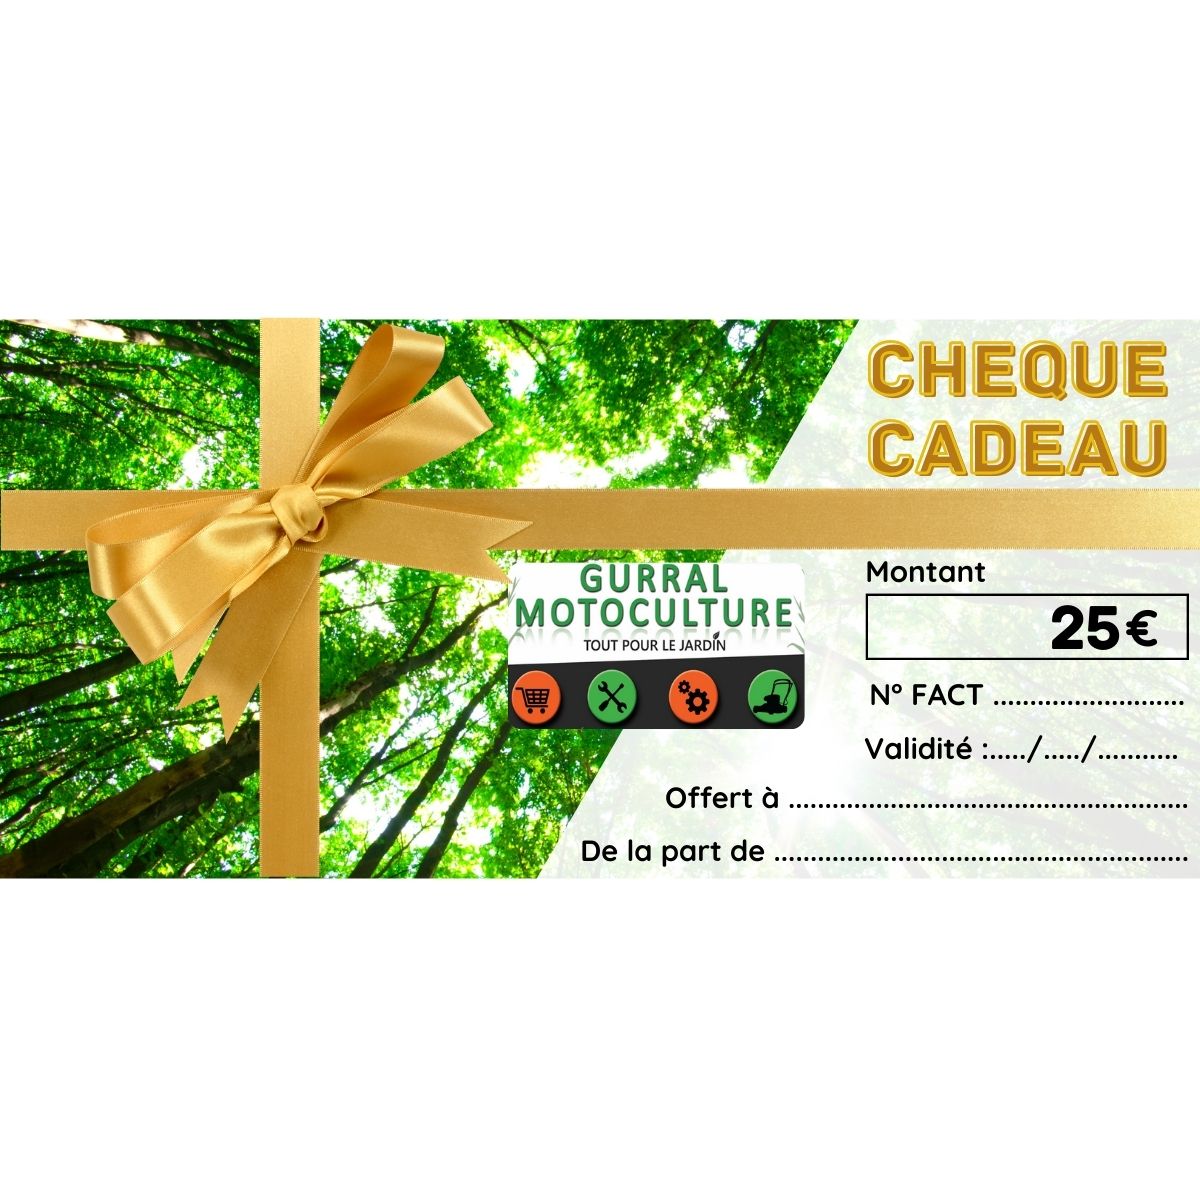 Cheque cadeau Gurral Motoculture 25€